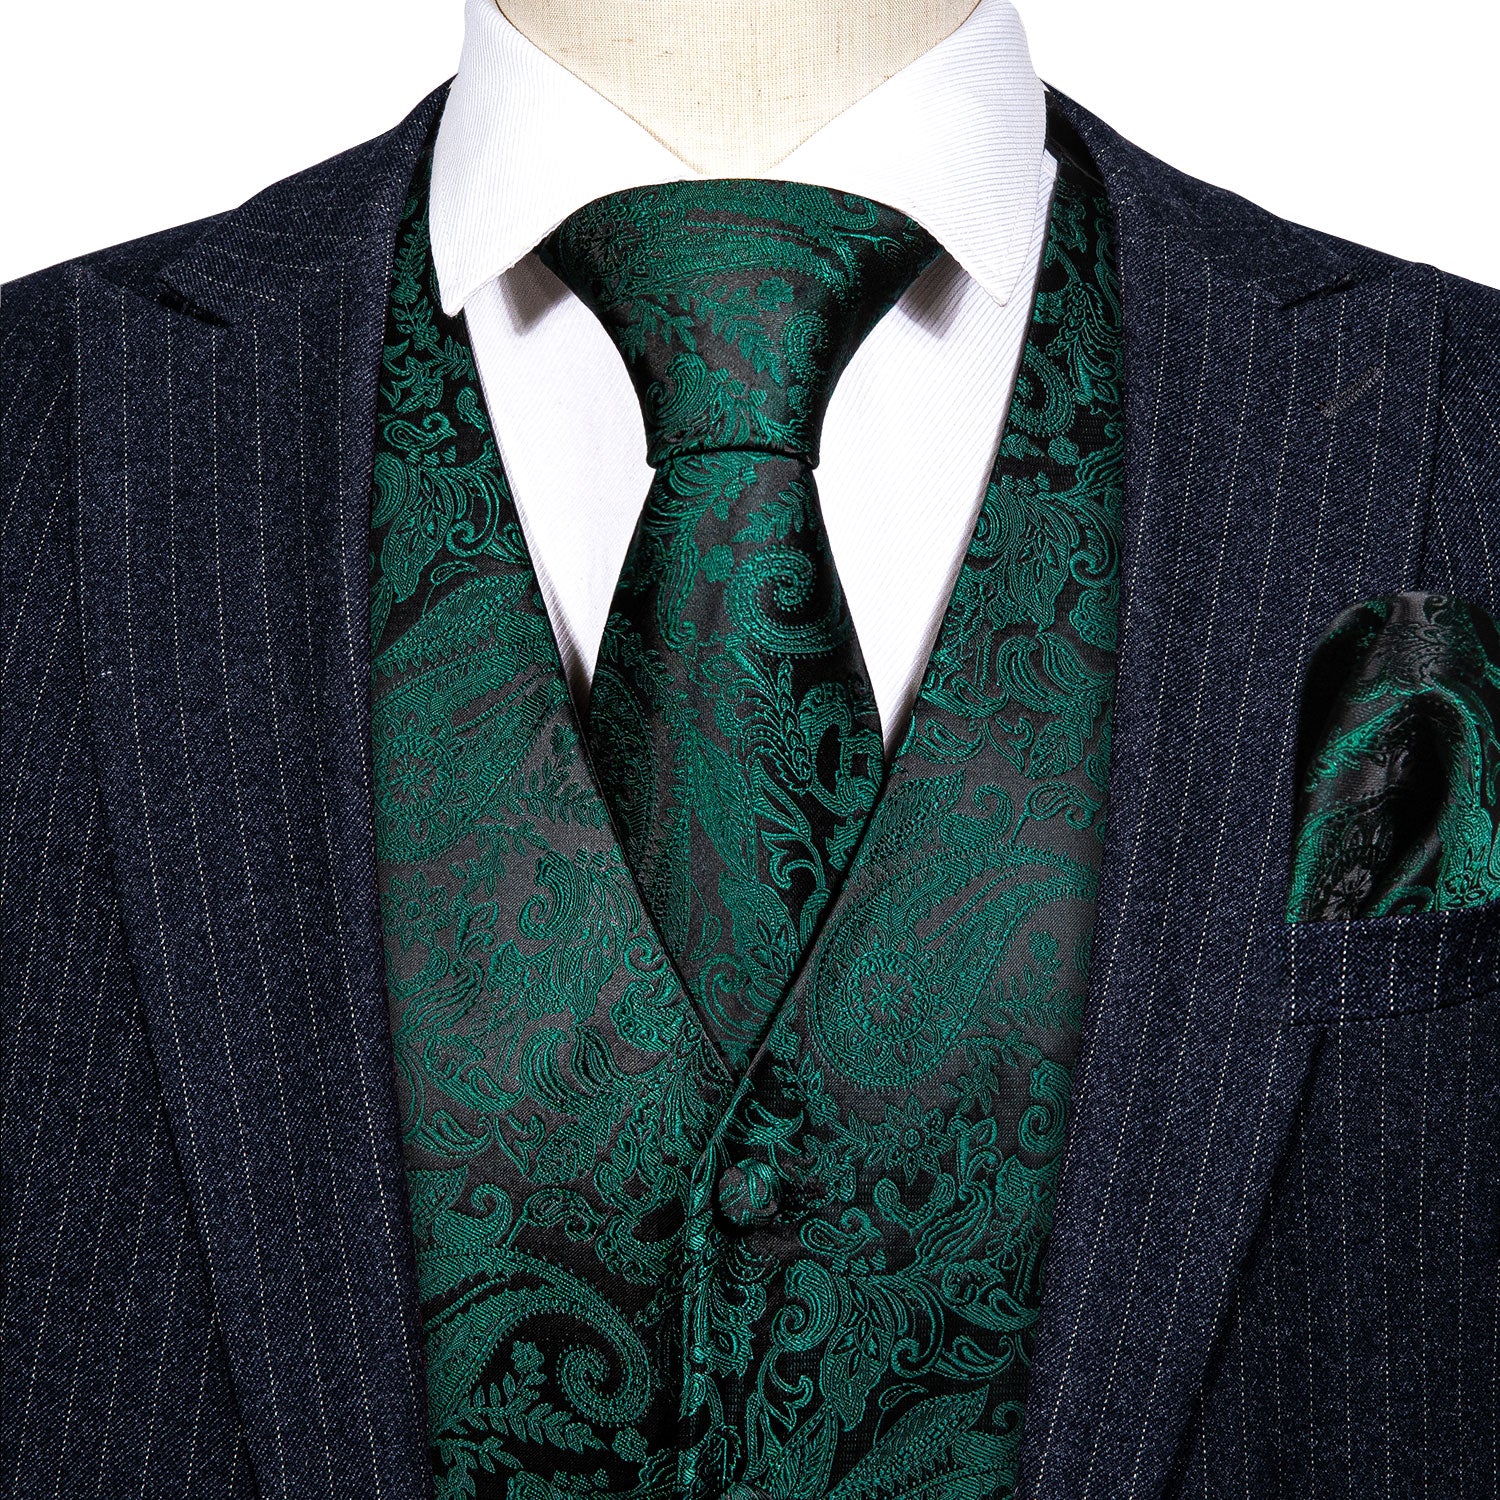 Barry.wang Men's Vest Black Green Paisley Silk Vest Necktie Pocket Square Cufflinks Set